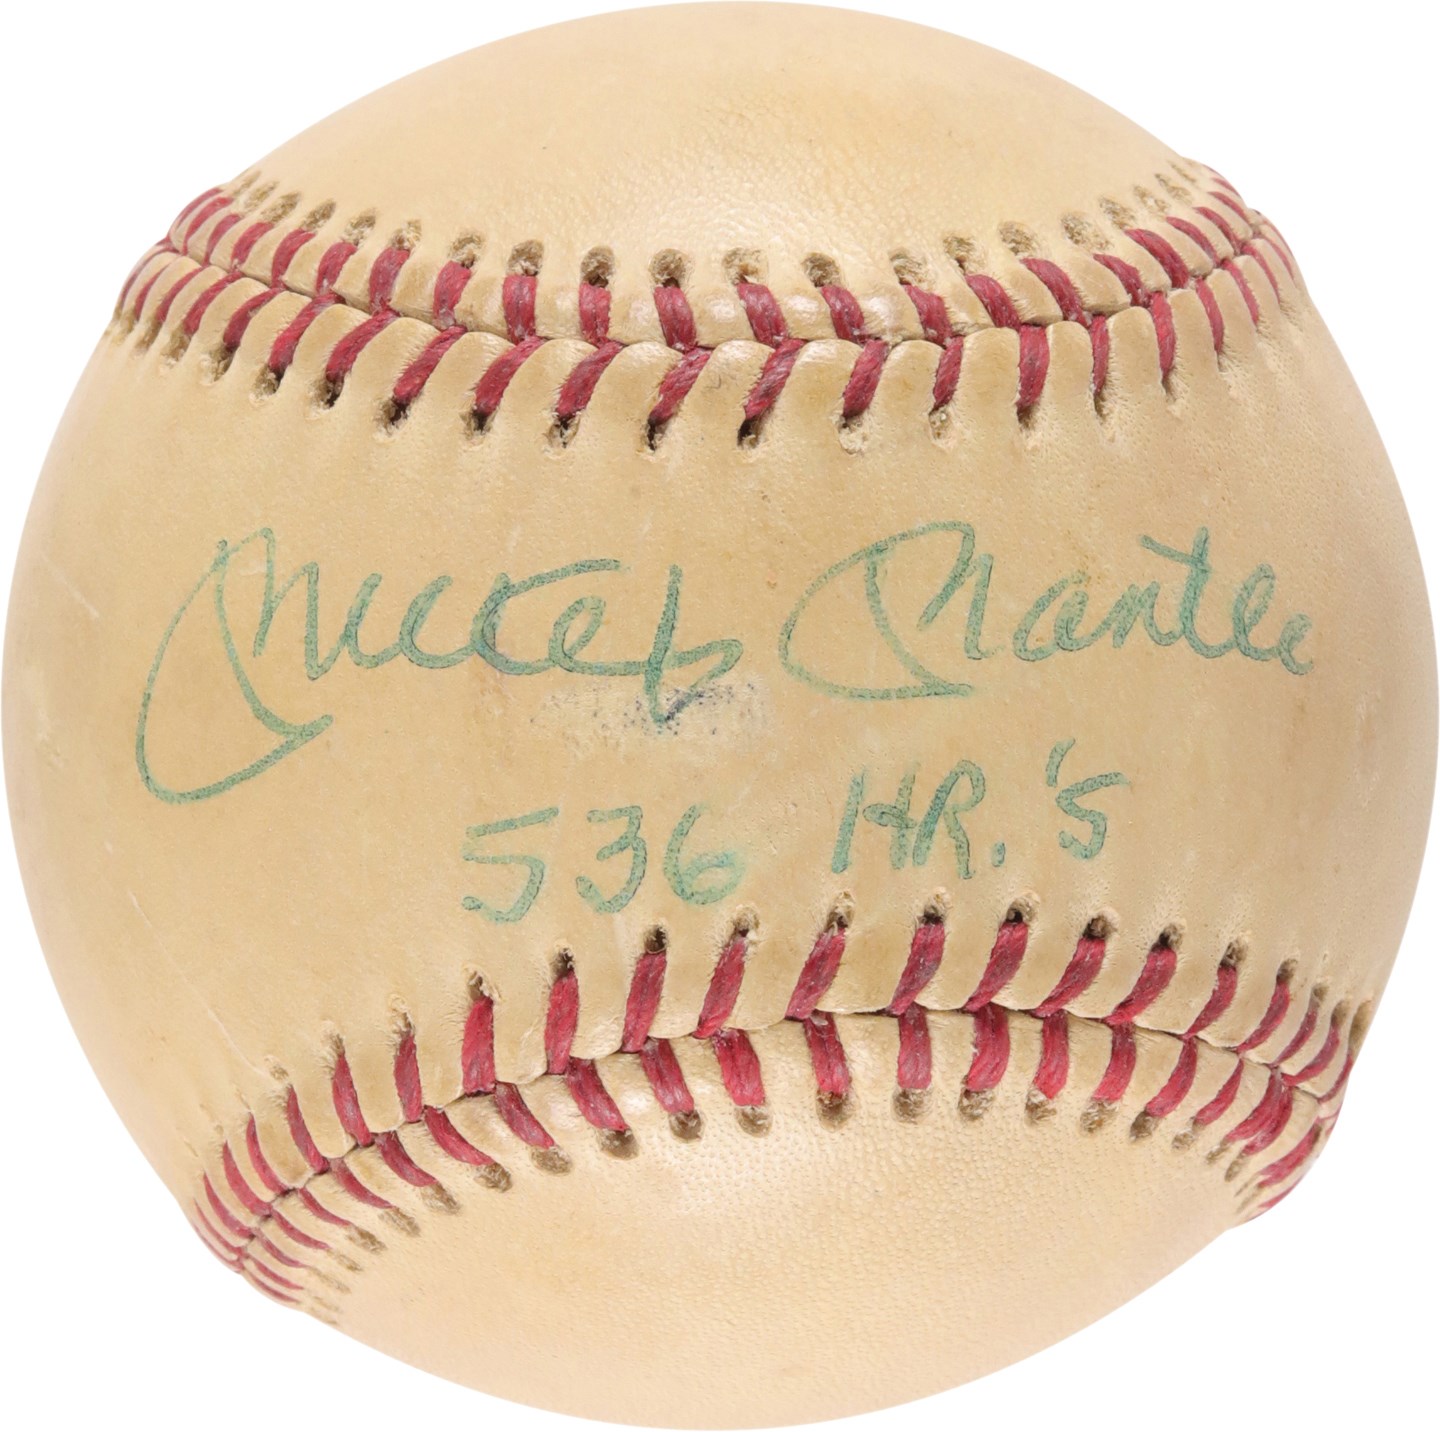 - Mickey Mantle "536 HR's" Single-Signed Baseball (JSA)